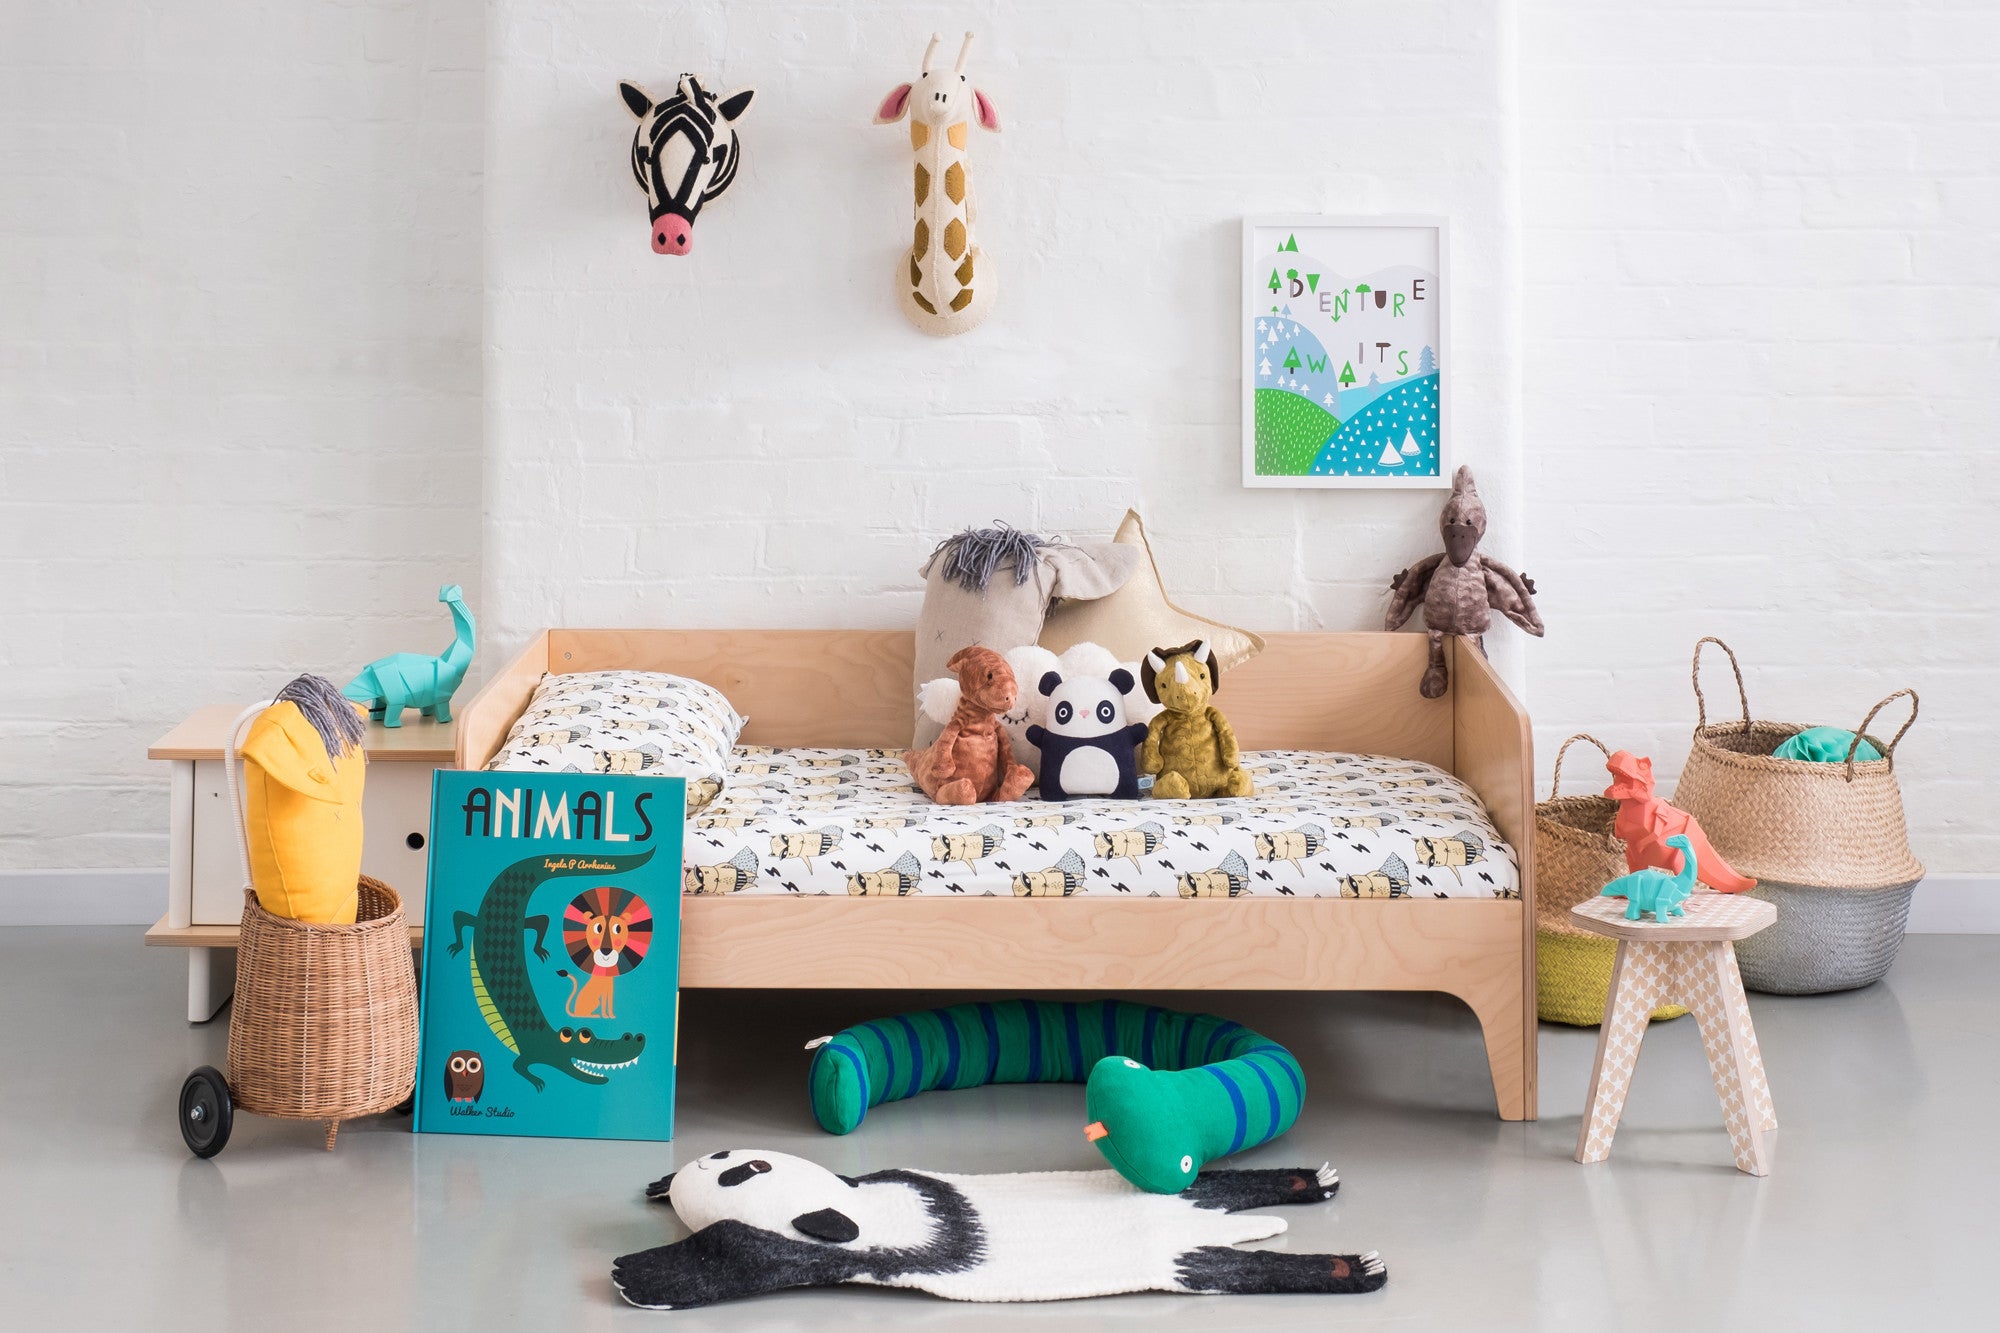 Animal Adventure Children's Room, styled by Bobby Rabbit.